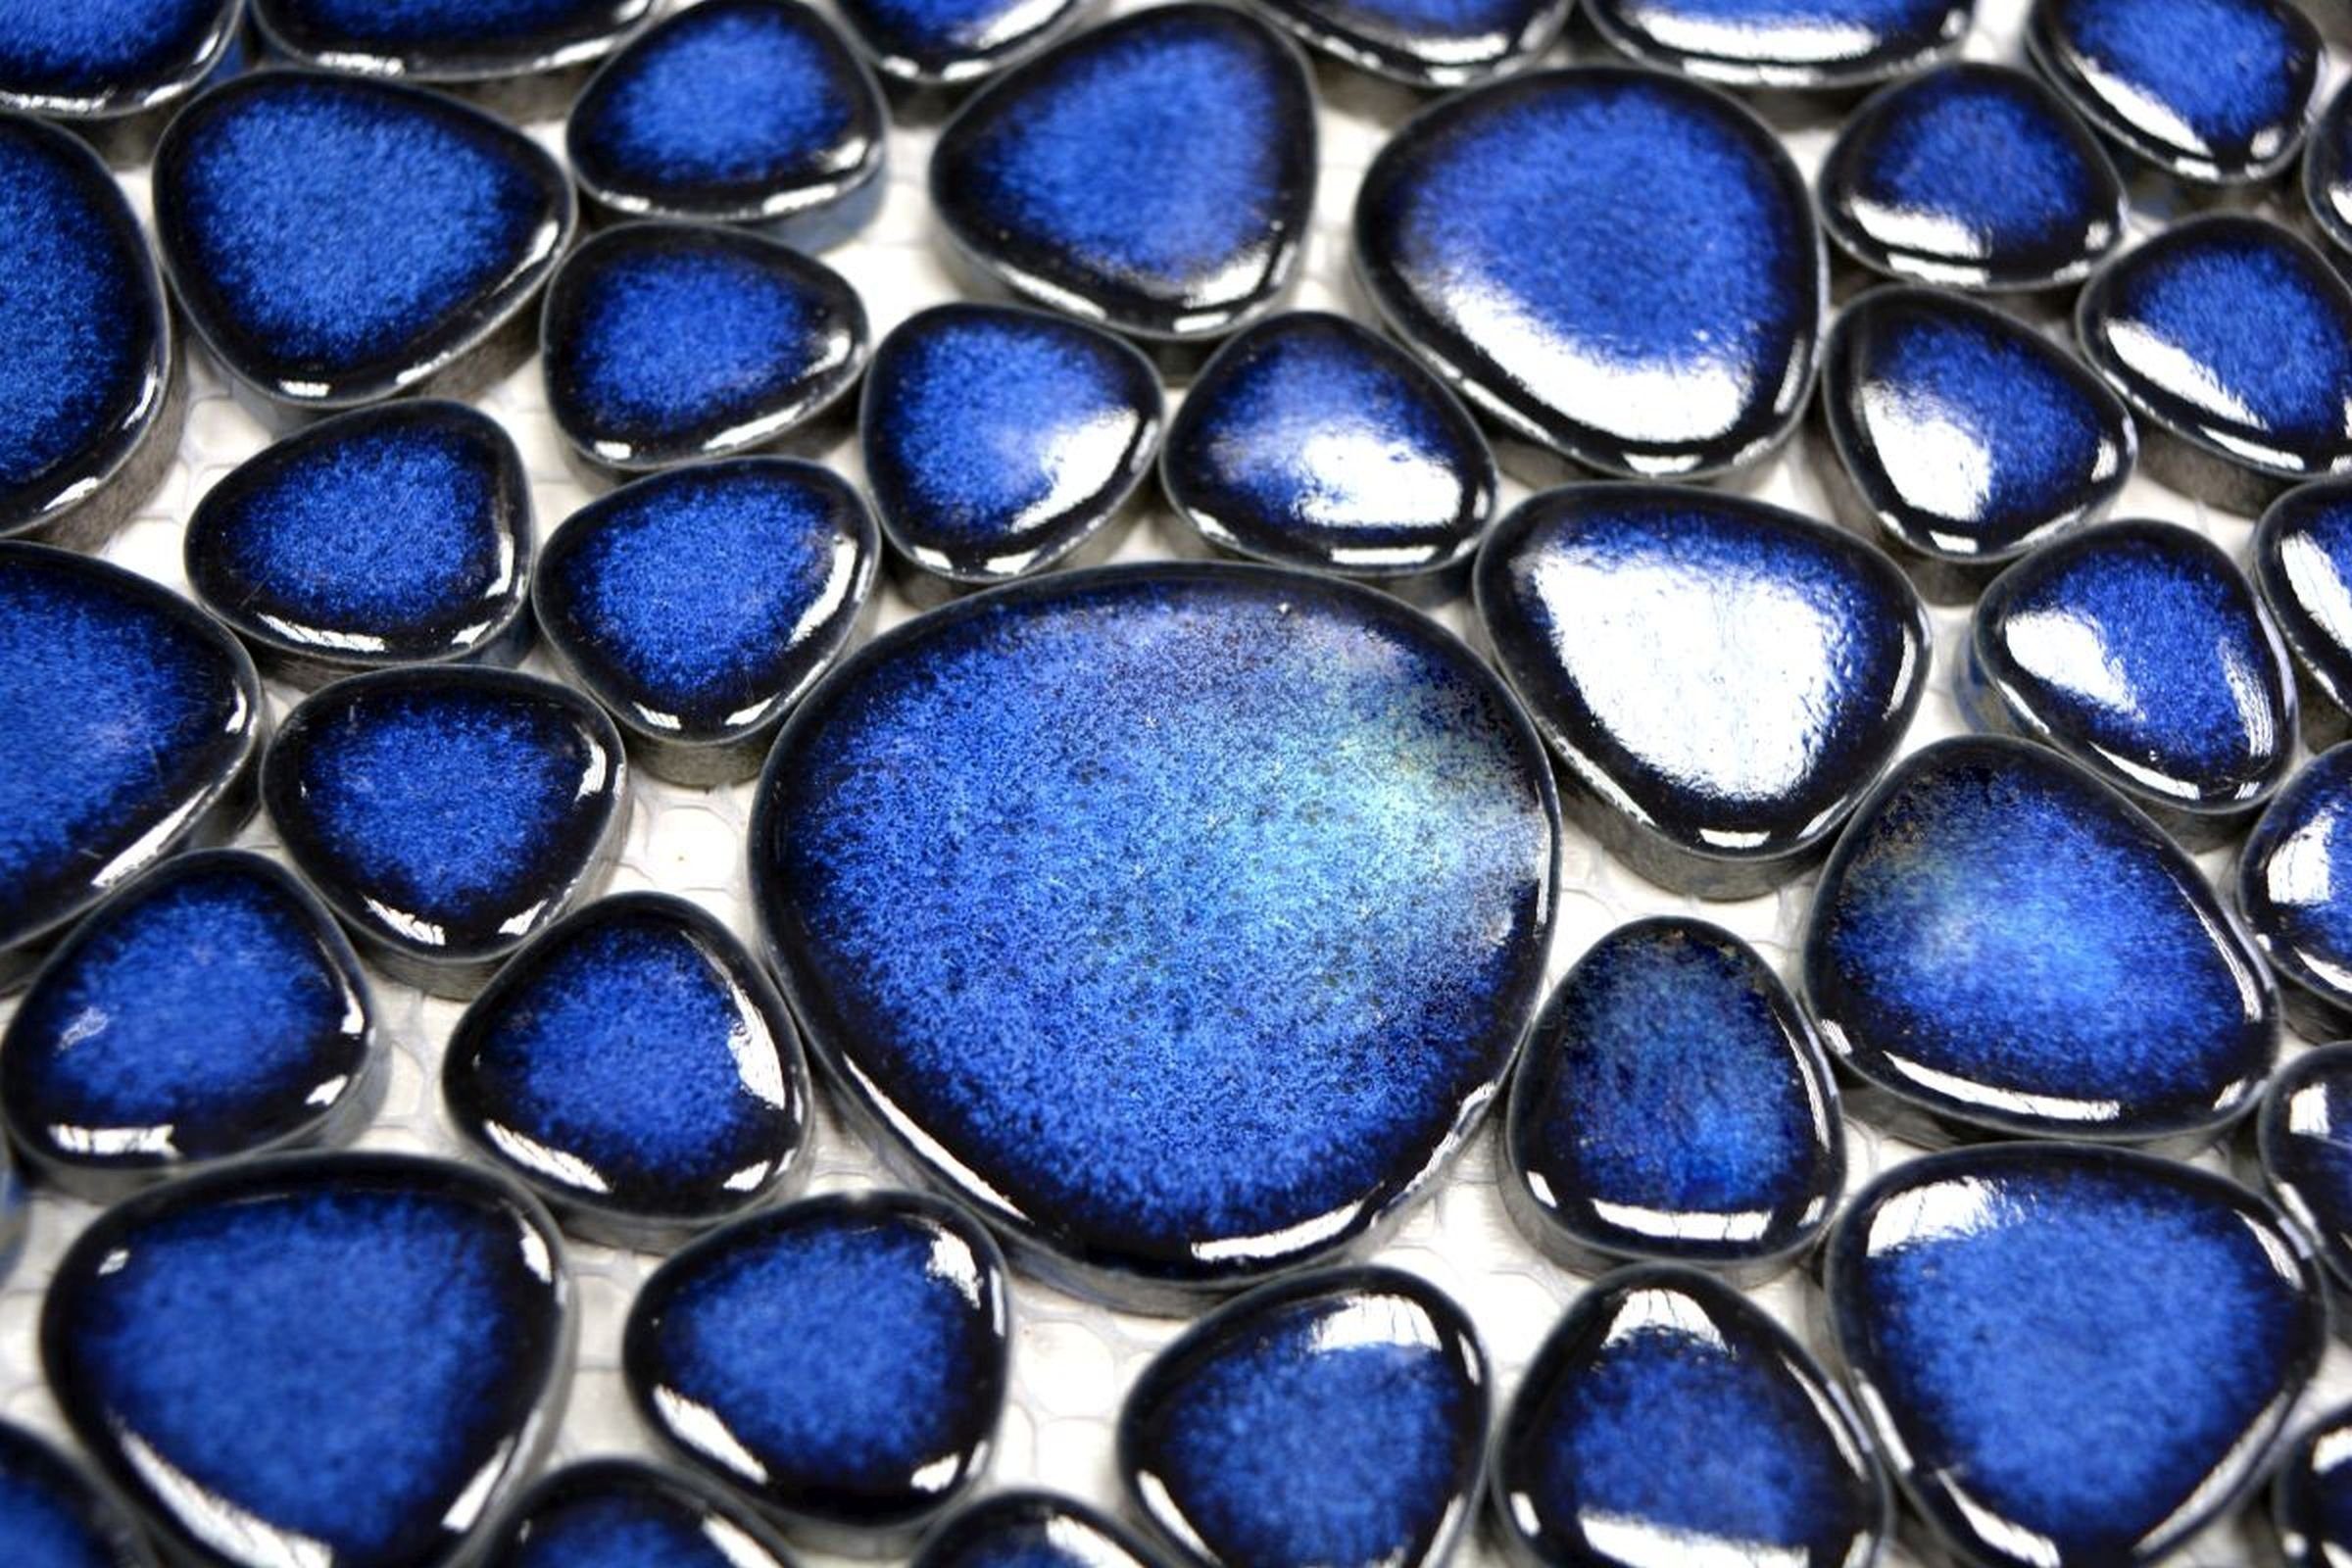 Mosani Mosaikfliesen Fliesenspiegel Keramikdrops blau Pebbles glänzend Kieselmosaik